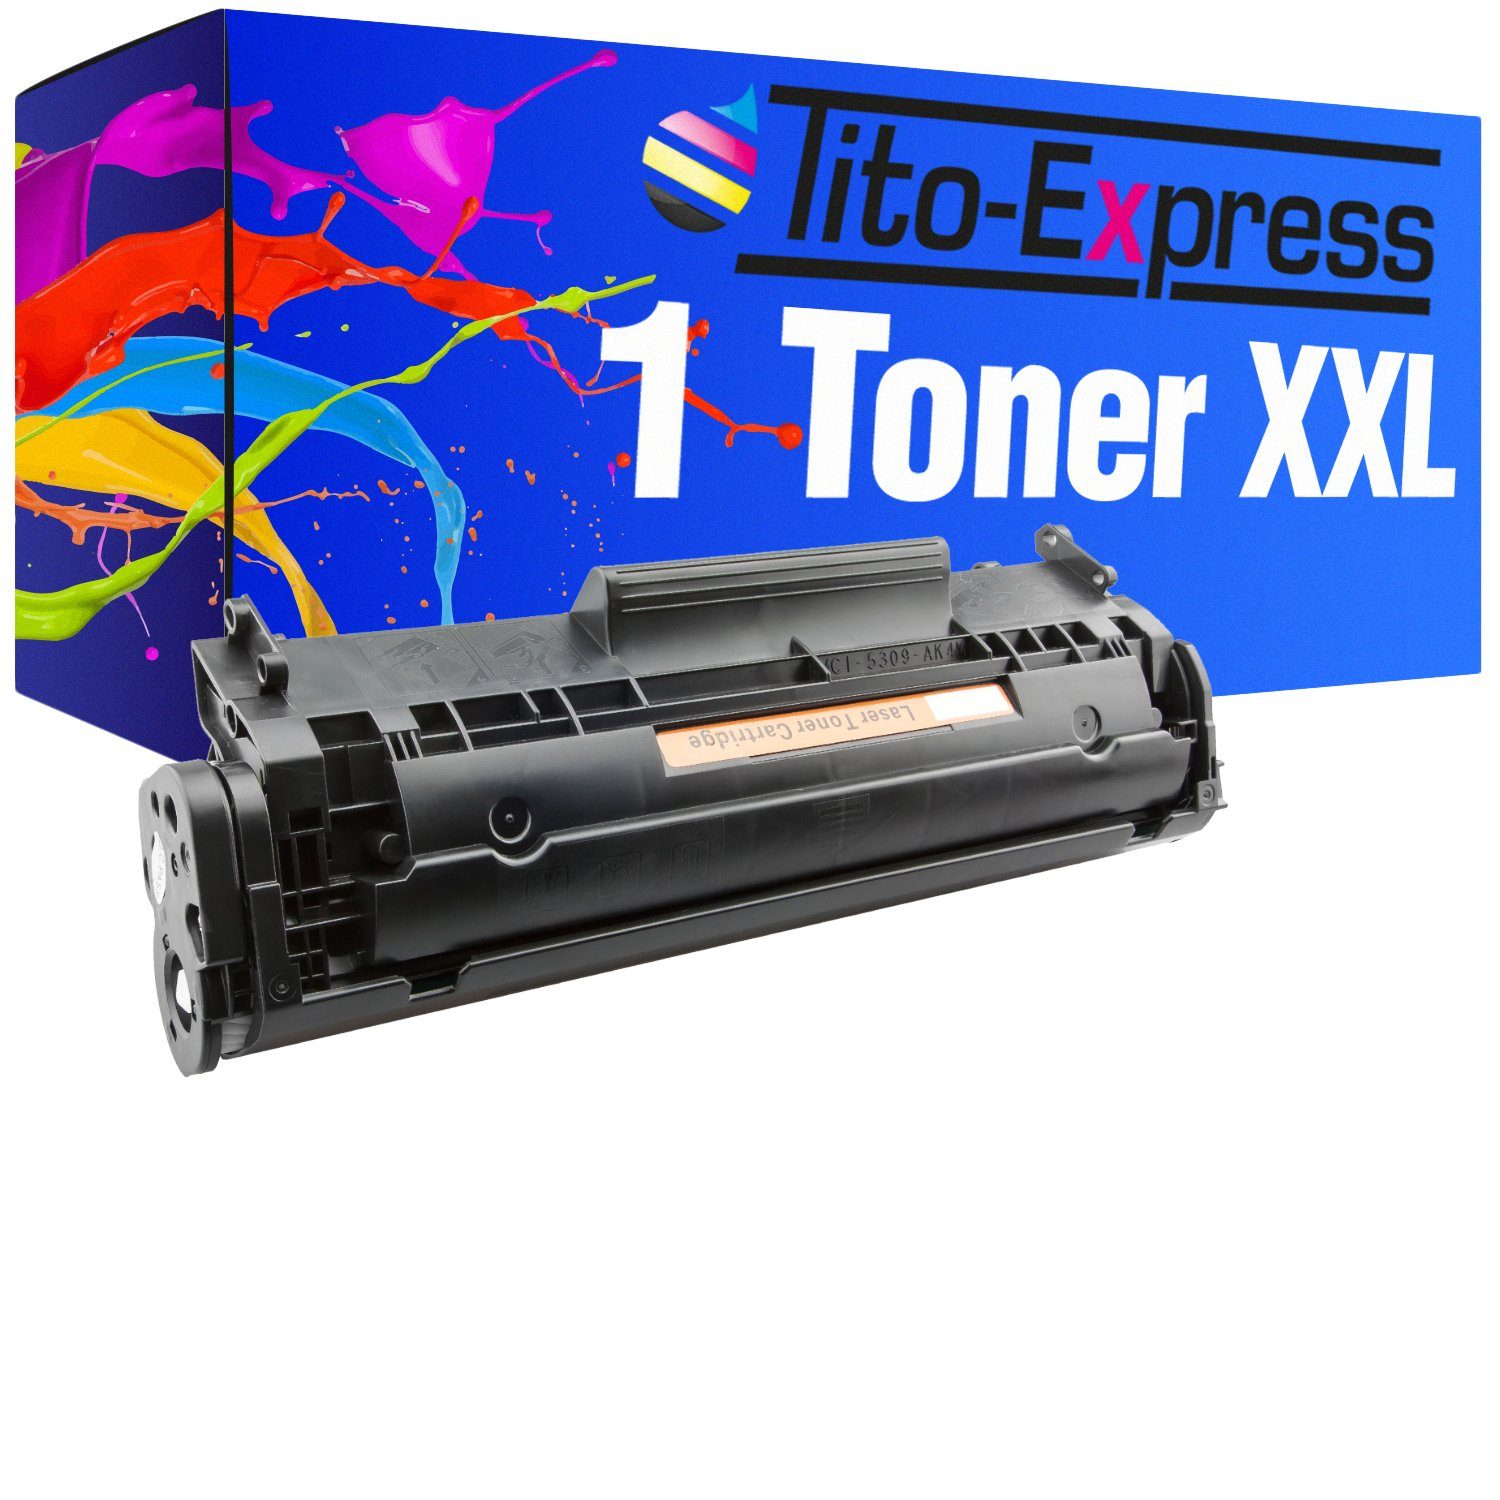 Tito-Express Tonerpatrone ersetzt HP Q 2610 A HP Q 2610A HPQ2610A HP 10A Black, für LaserJet 2300 Series 2300 2300D 2300L 2300DN 2300DTN 2300N